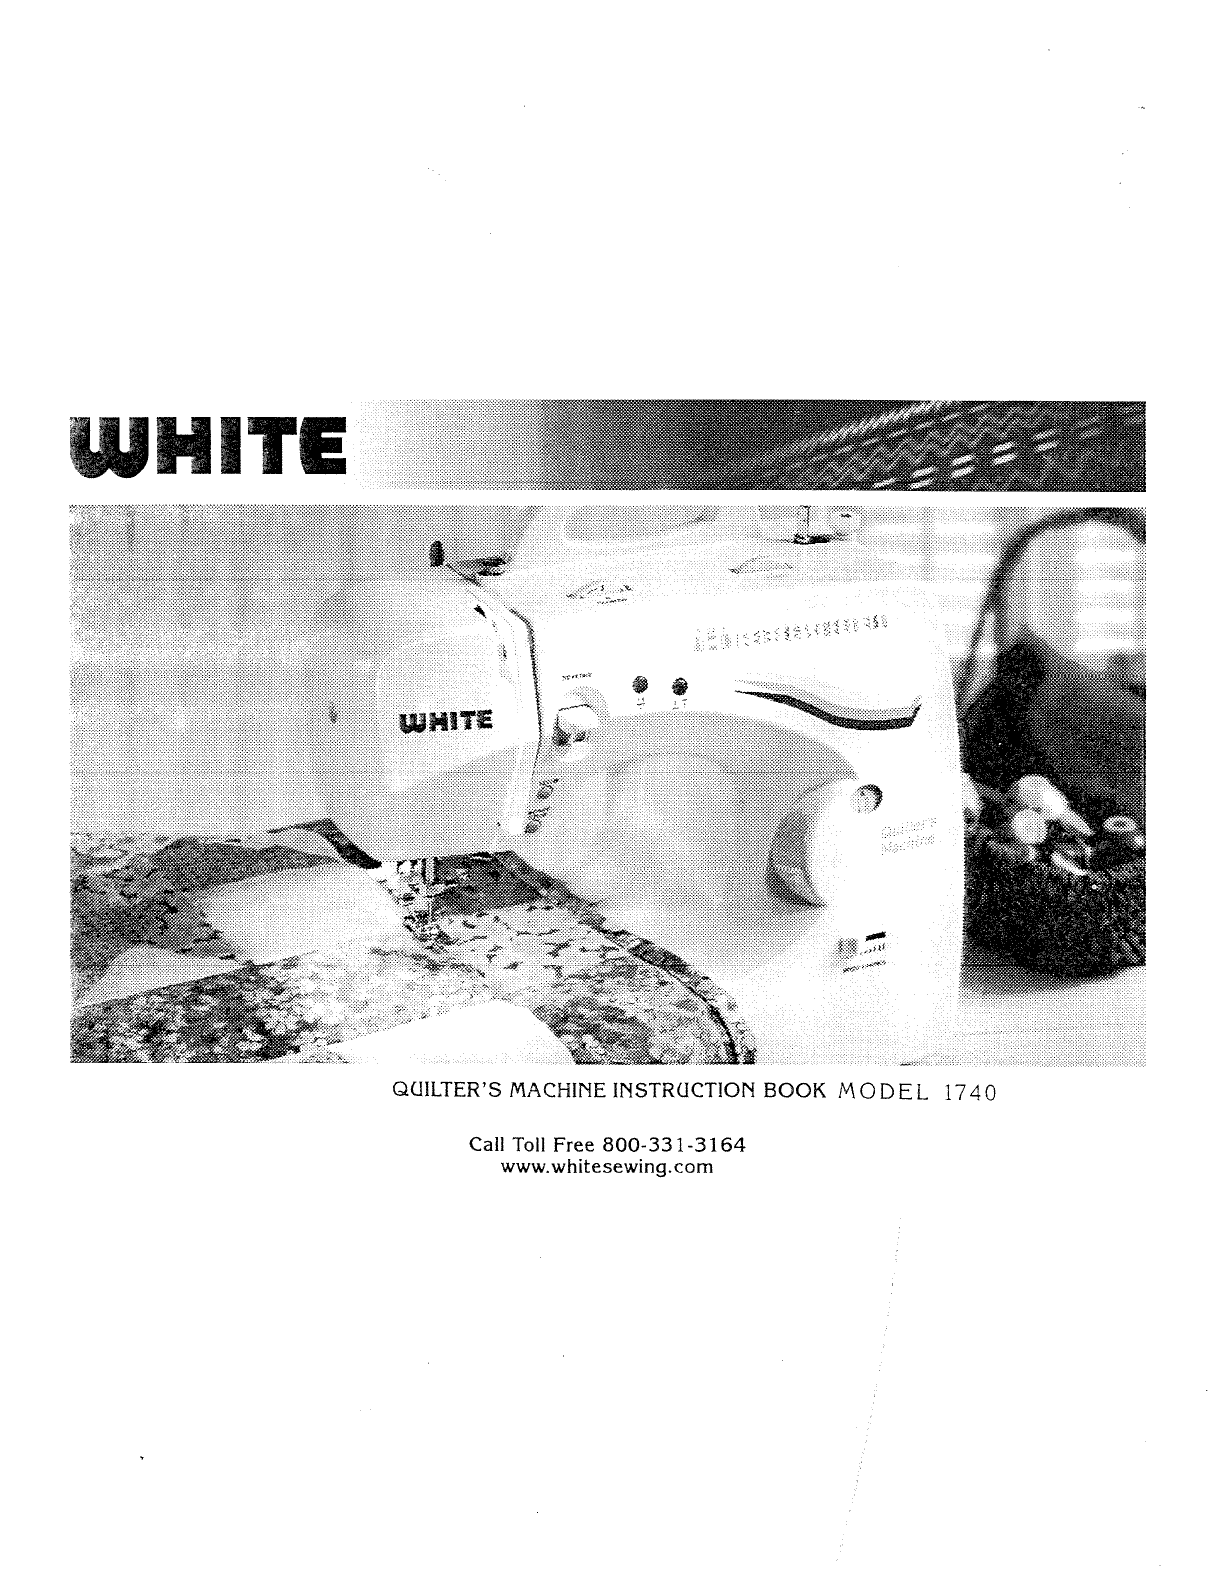 White sewing machine 1710 manual